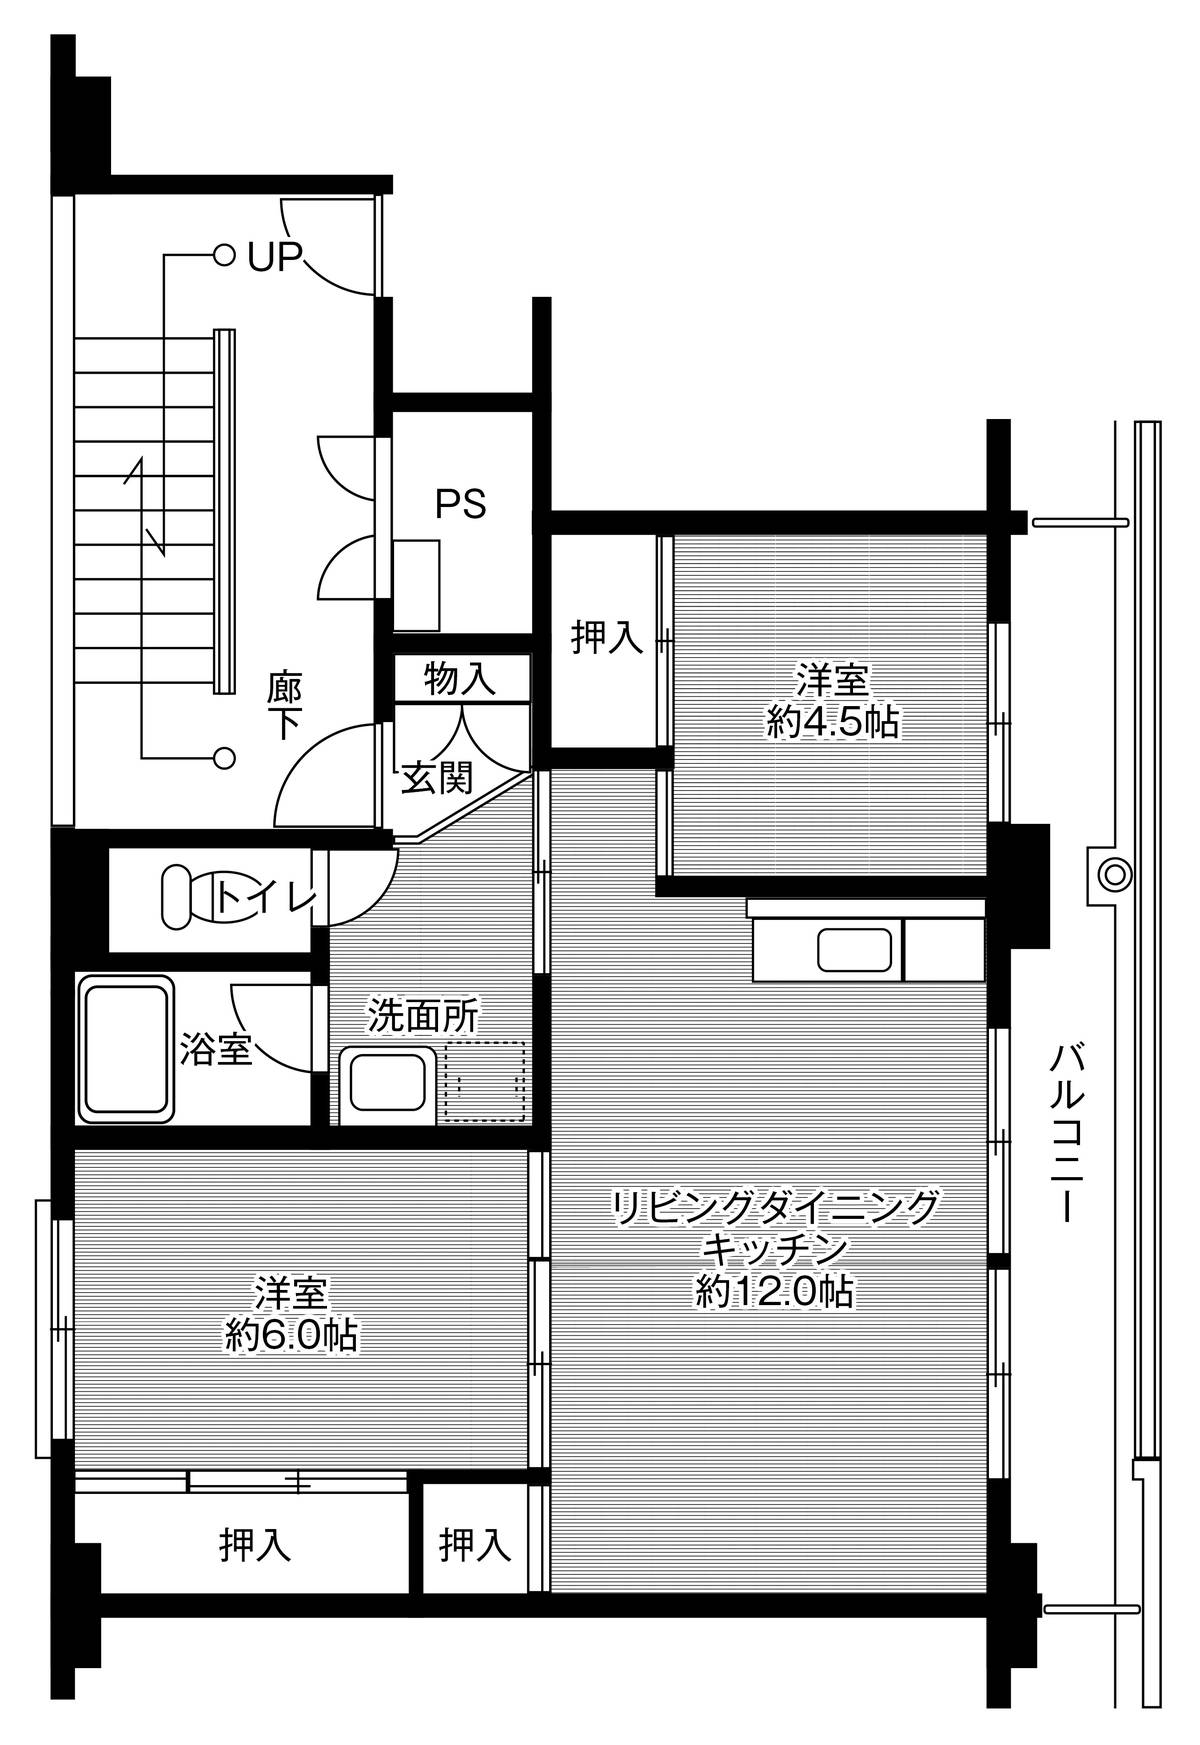 2LDK floorplan of Village House Sanno in Tenryu-ku